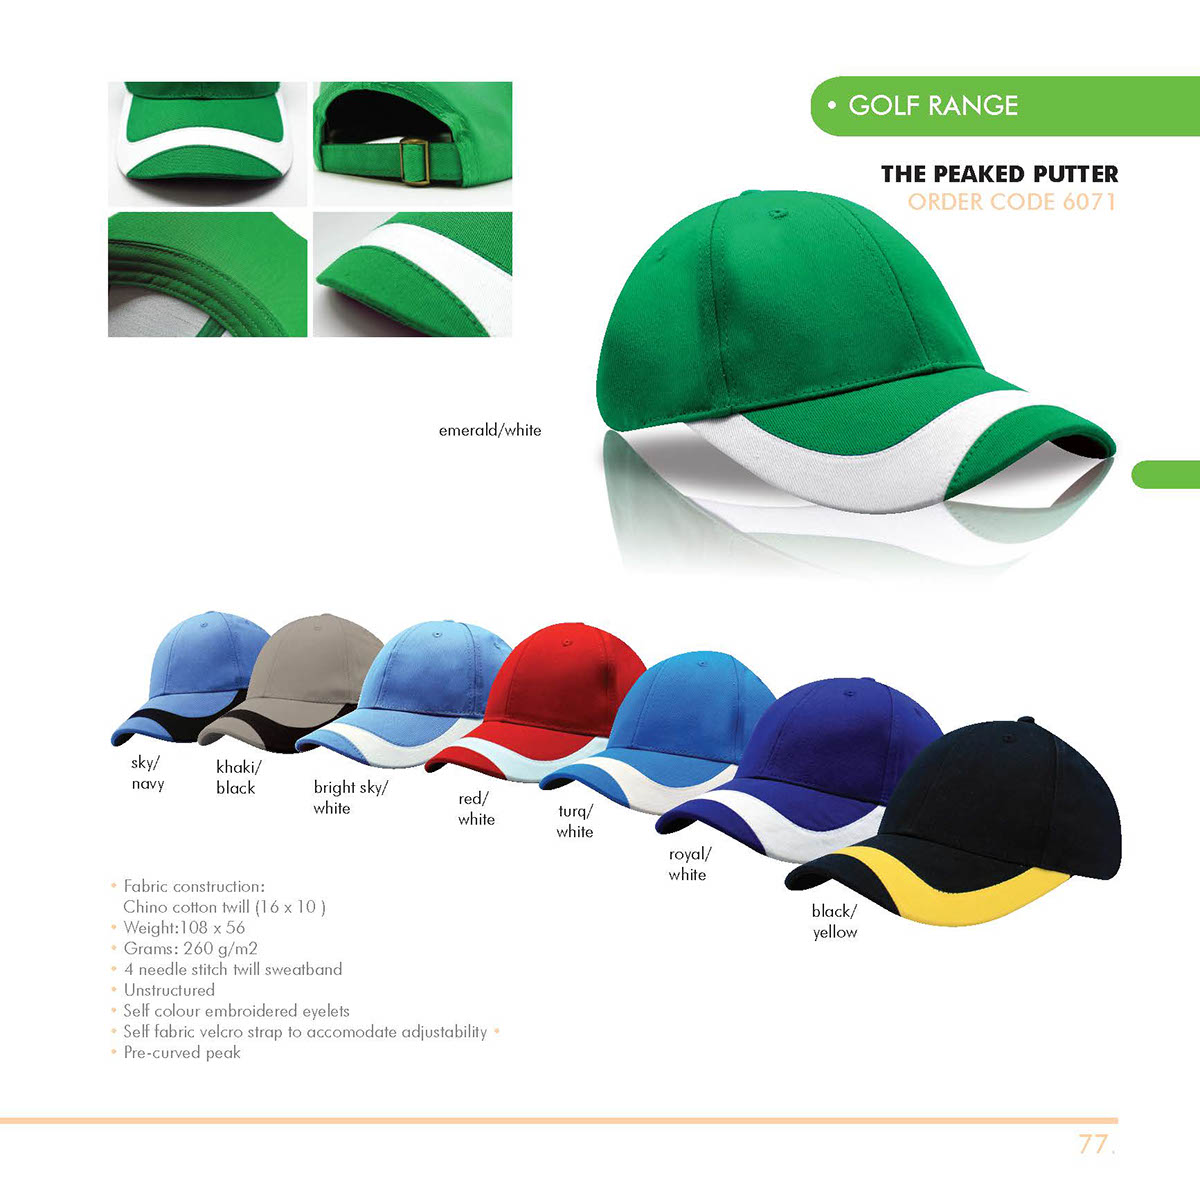 Catalogue design headwear Photography 